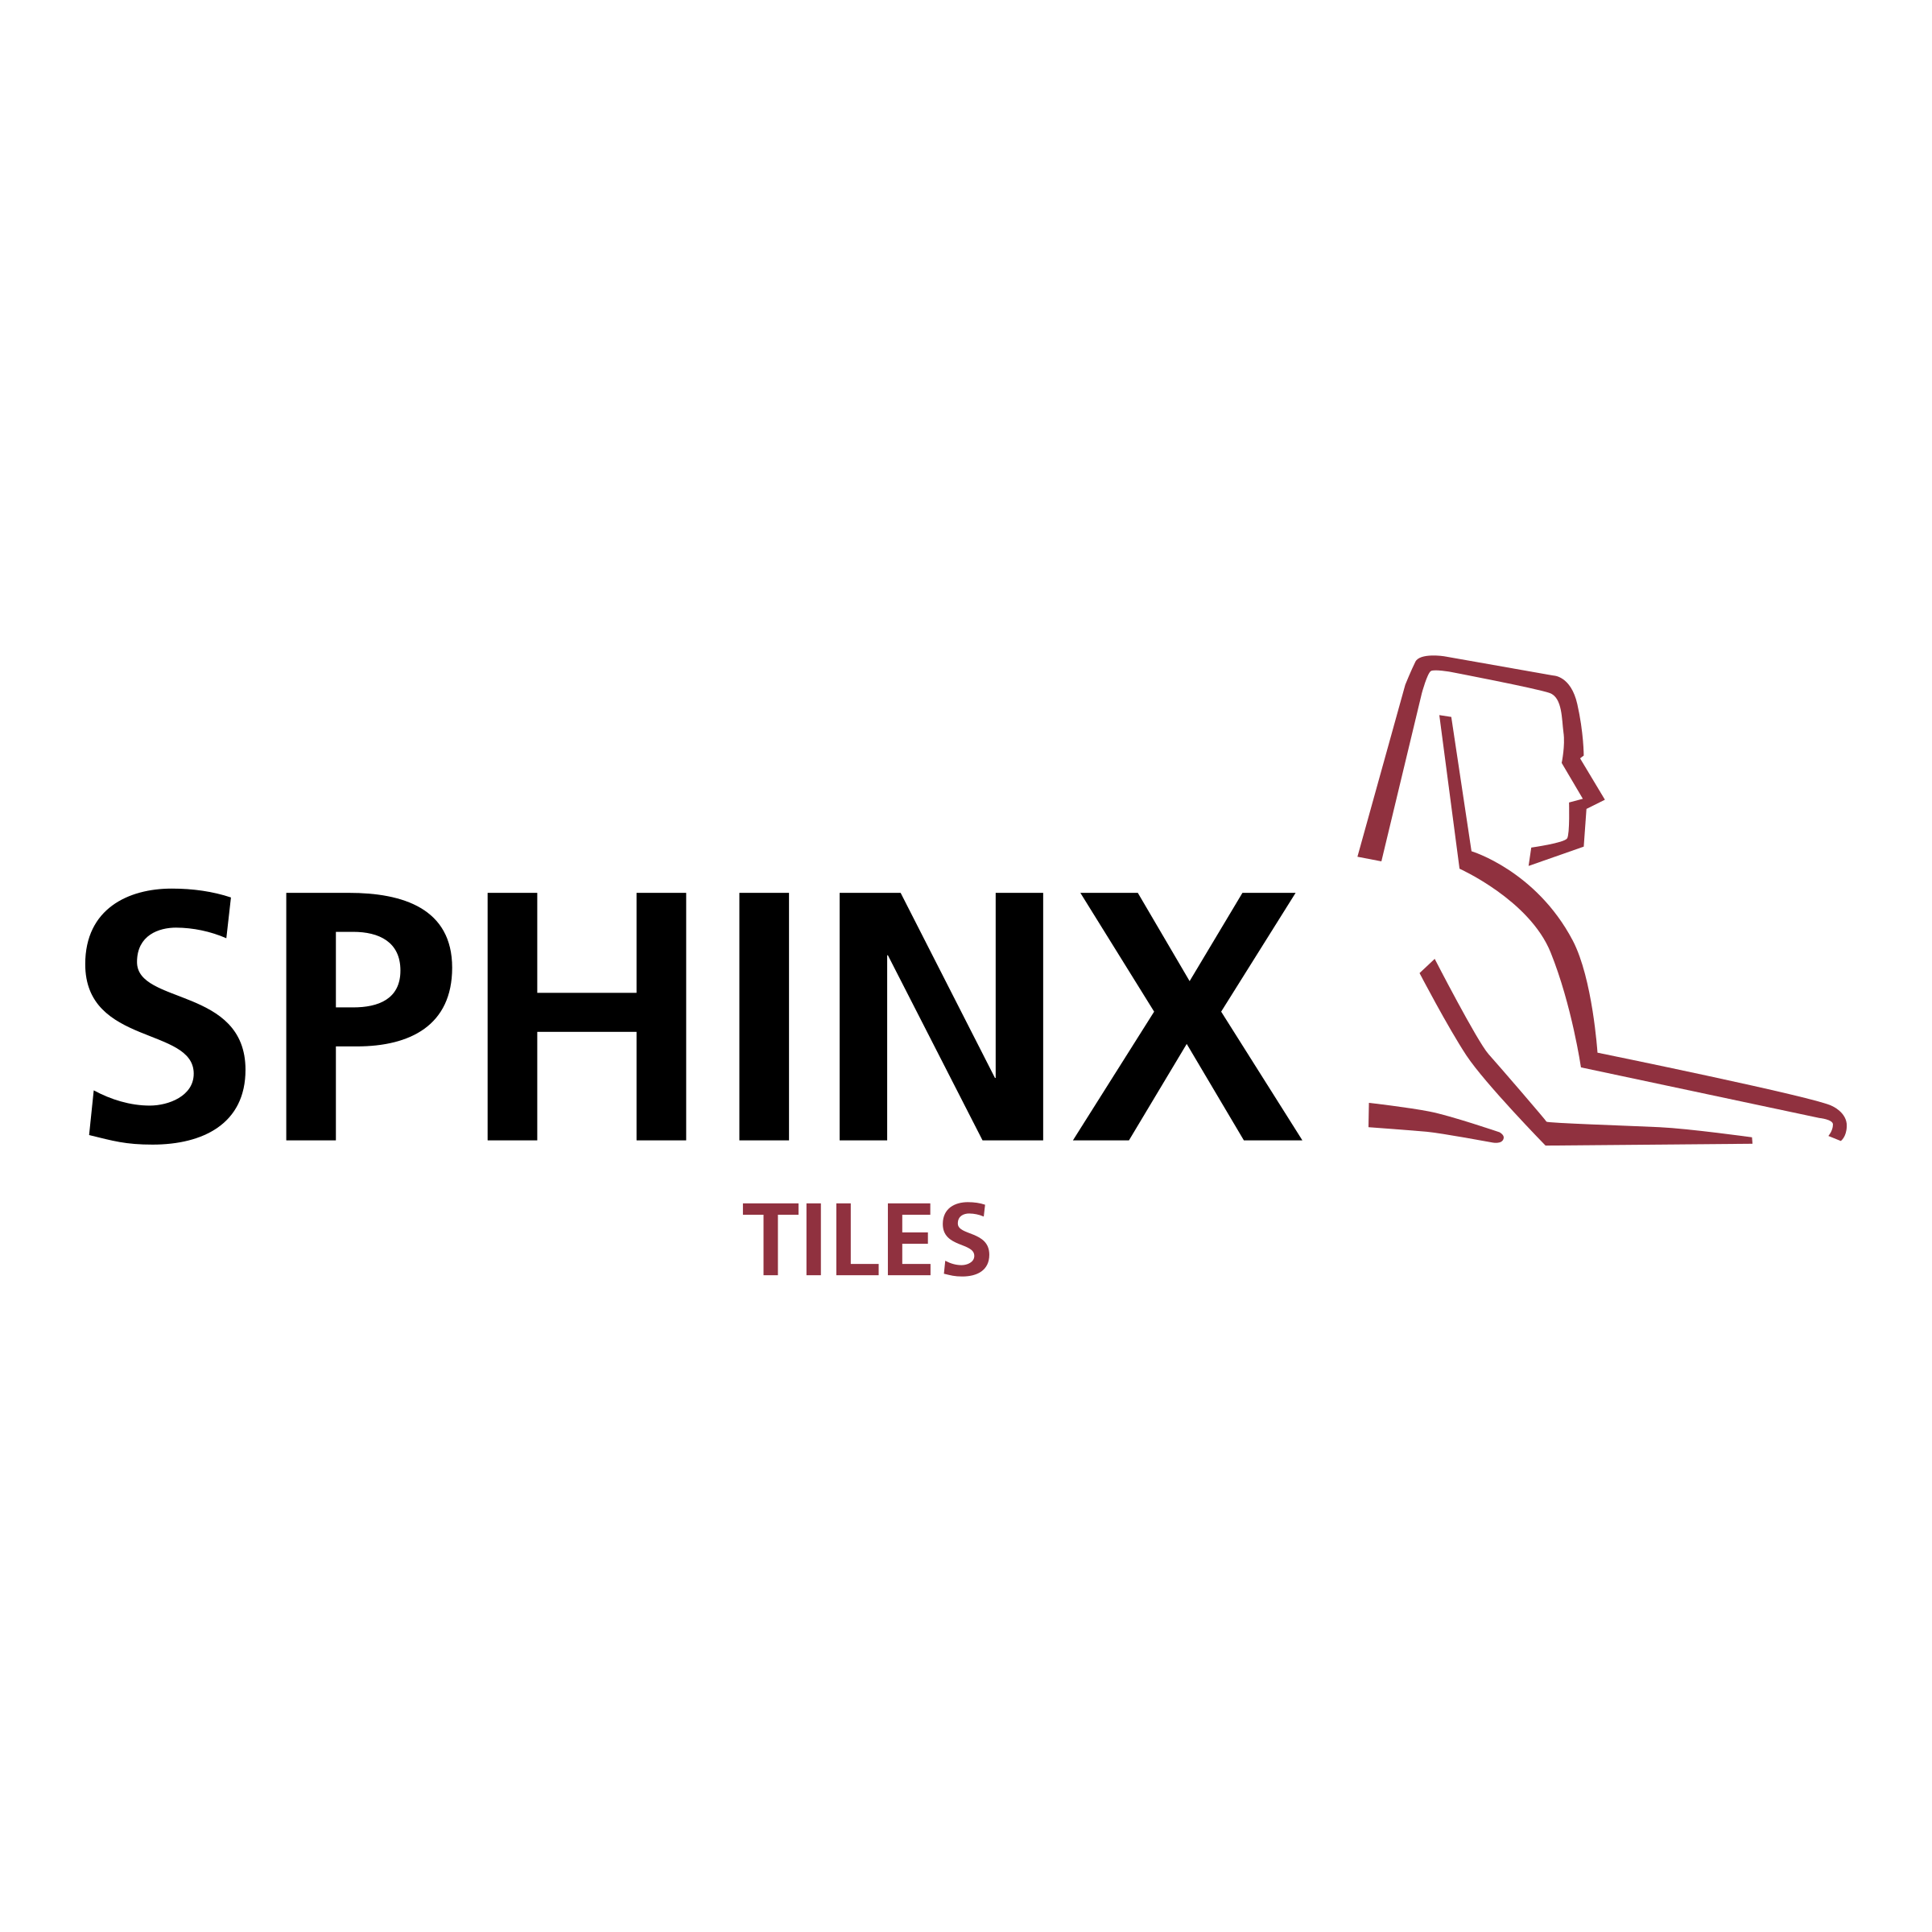 Sphinx Logo - Sphinx Tiles Logo PNG Transparent & SVG Vector